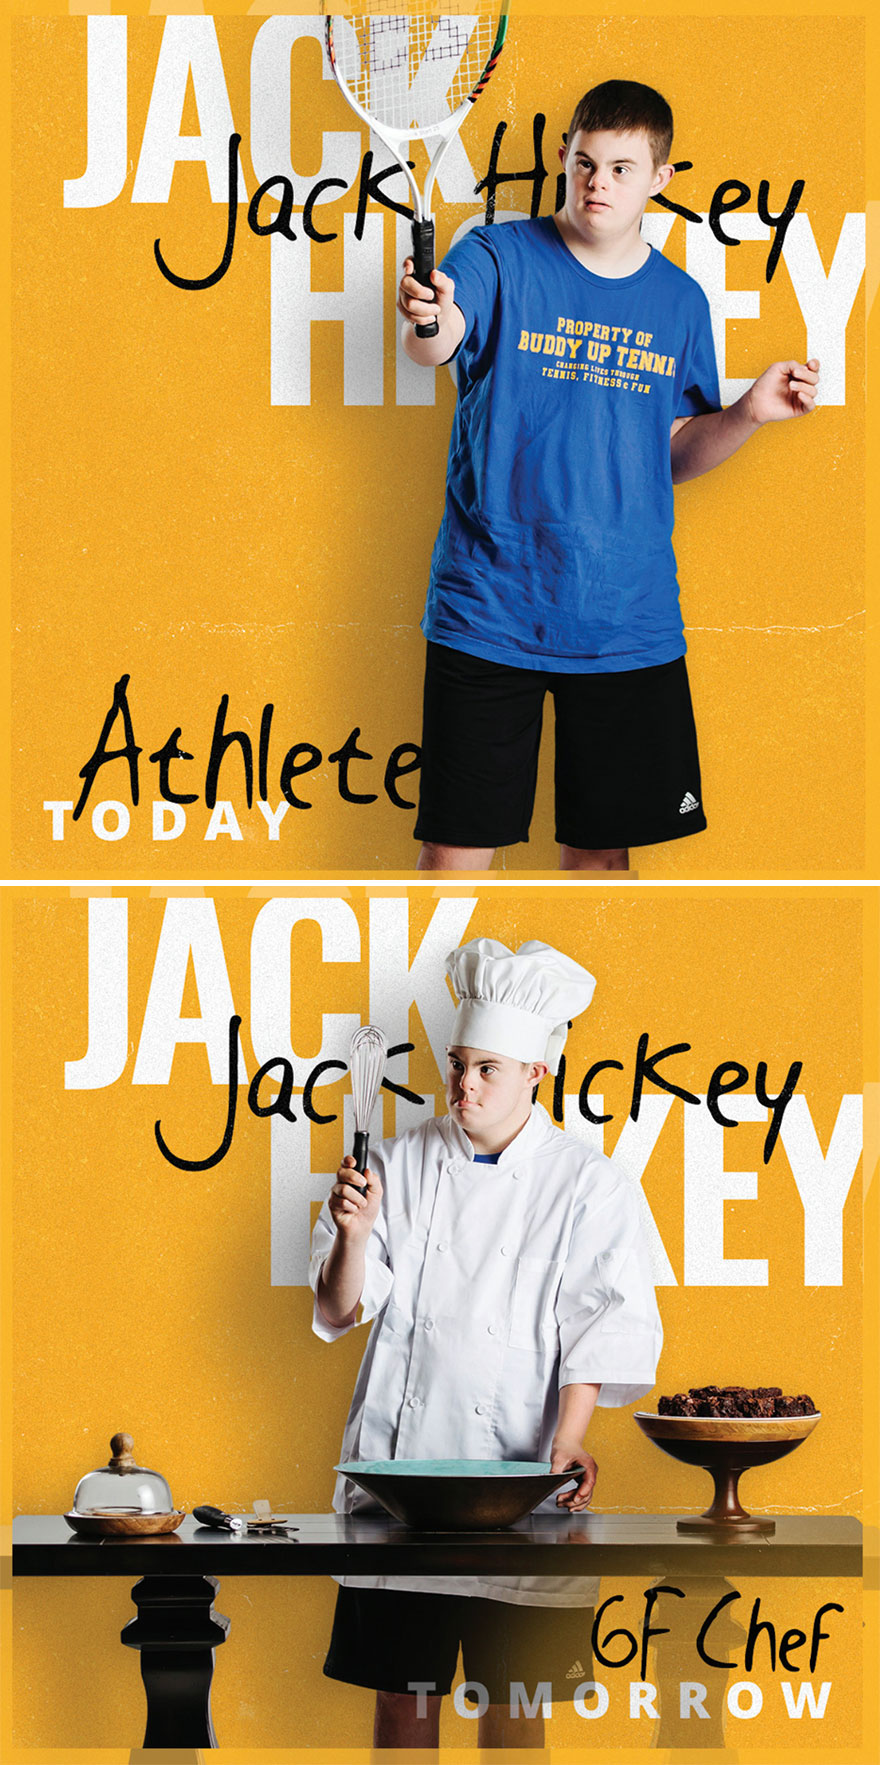 Jack Hickey, GF Chef